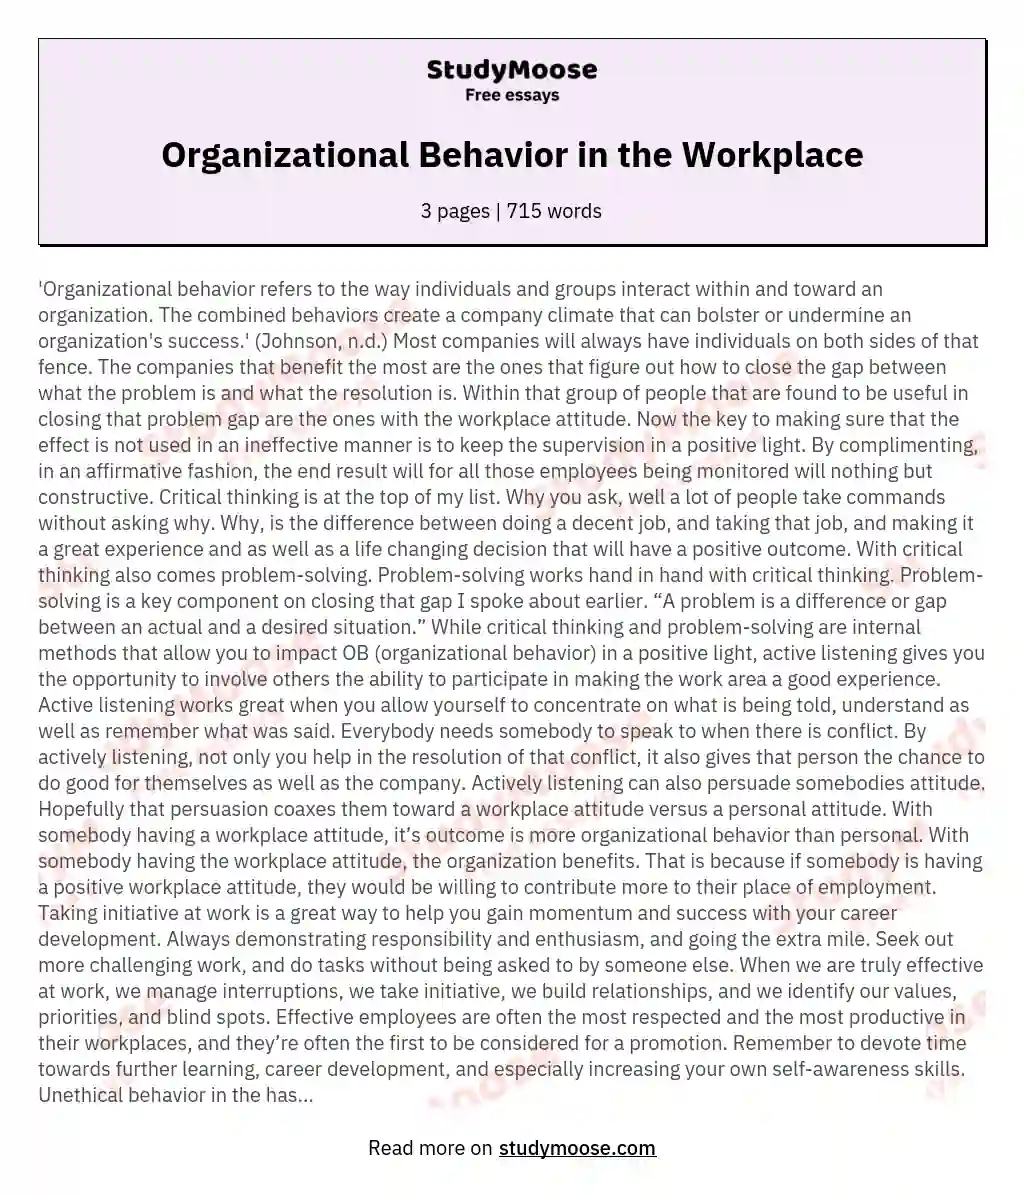 Organizational Behavior in the Workplace essay